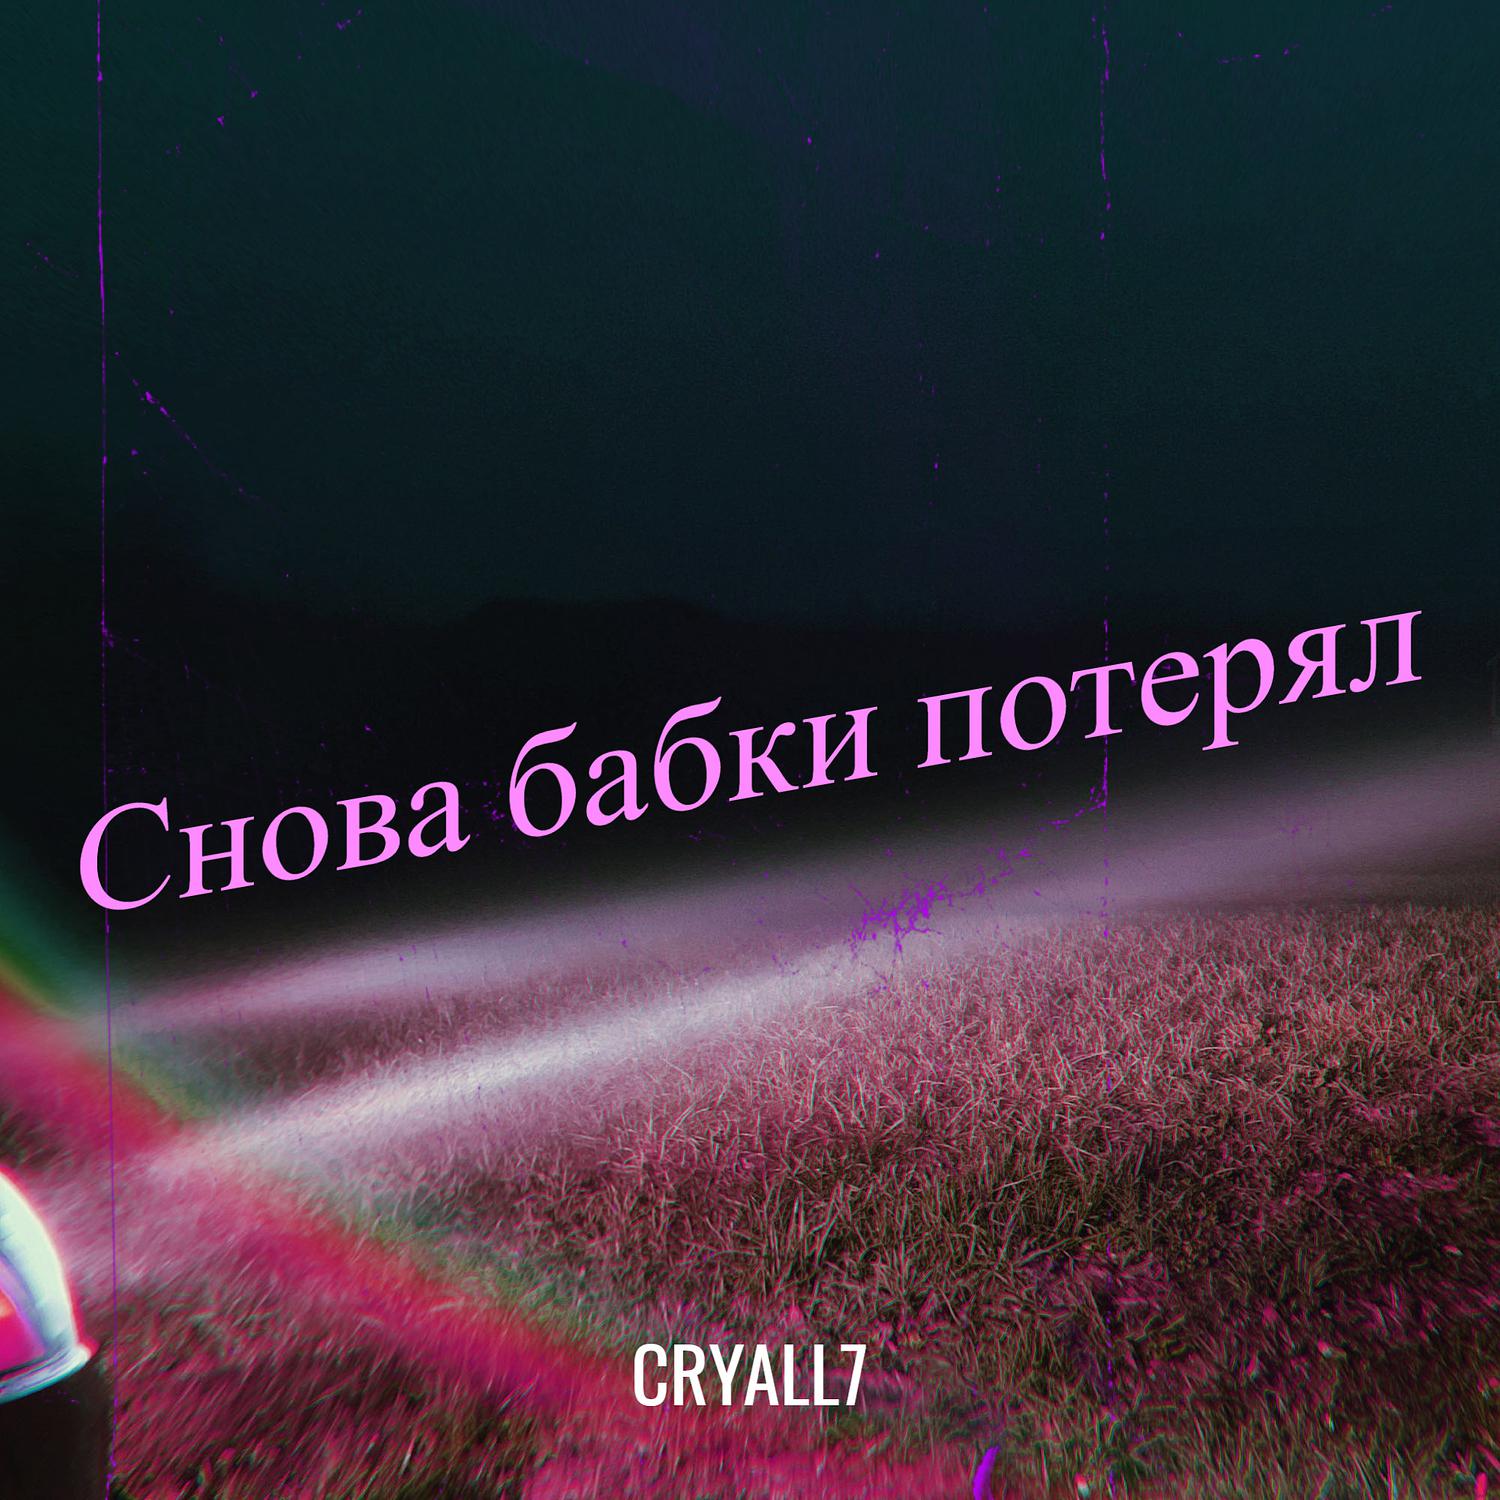 Cryall7 - Снова бабки потерял